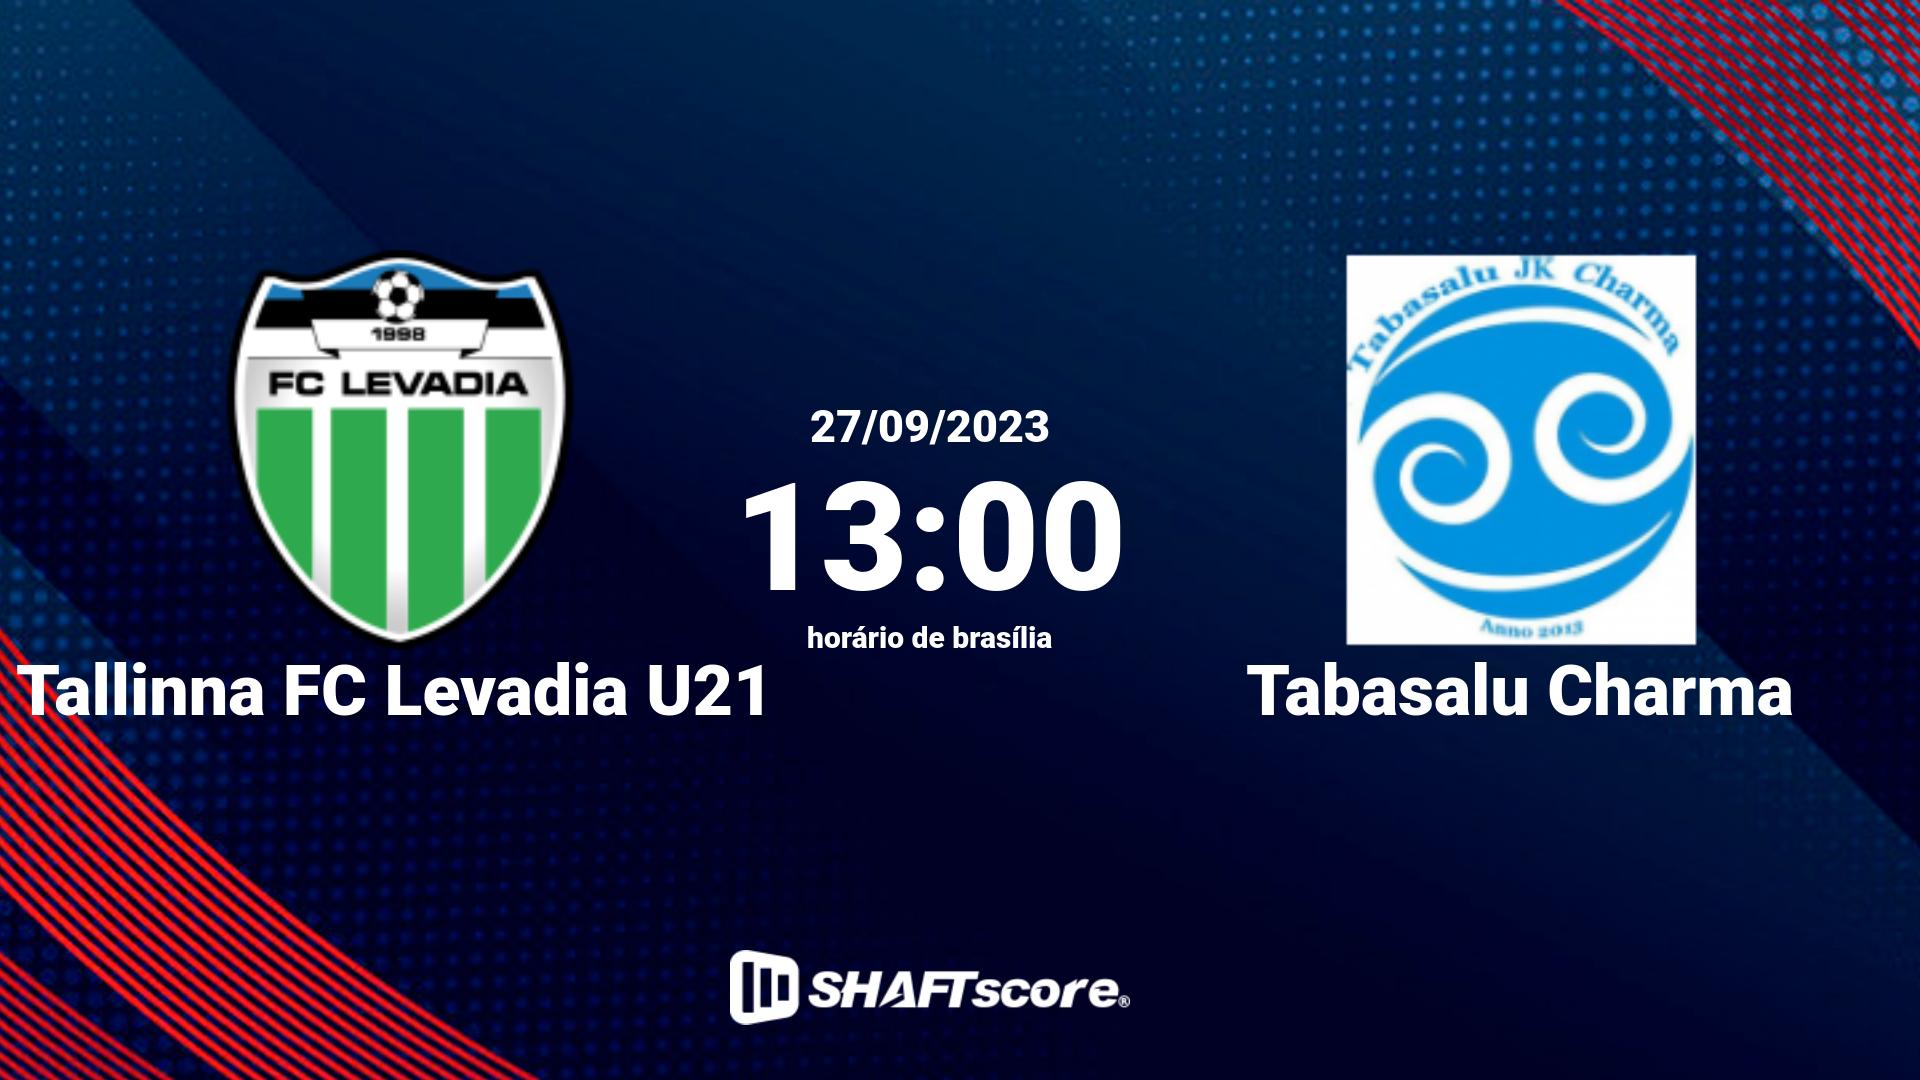 Estatísticas do jogo Tallinna FC Levadia U21 vs Tabasalu Charma 27.09 13:00